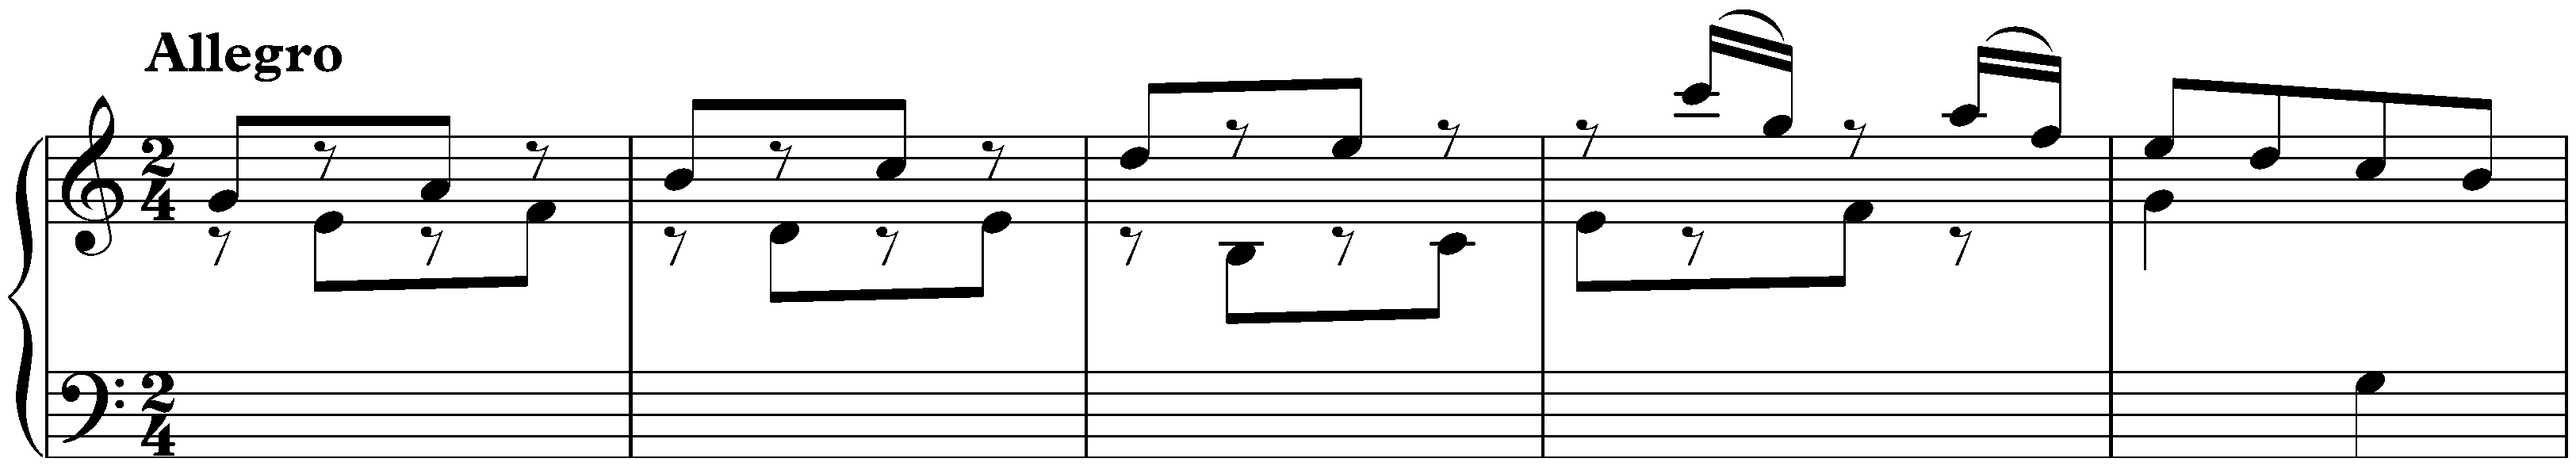 Notebook for Nannerl, KV 1–8; 54. Allegro in C major, KV 1b